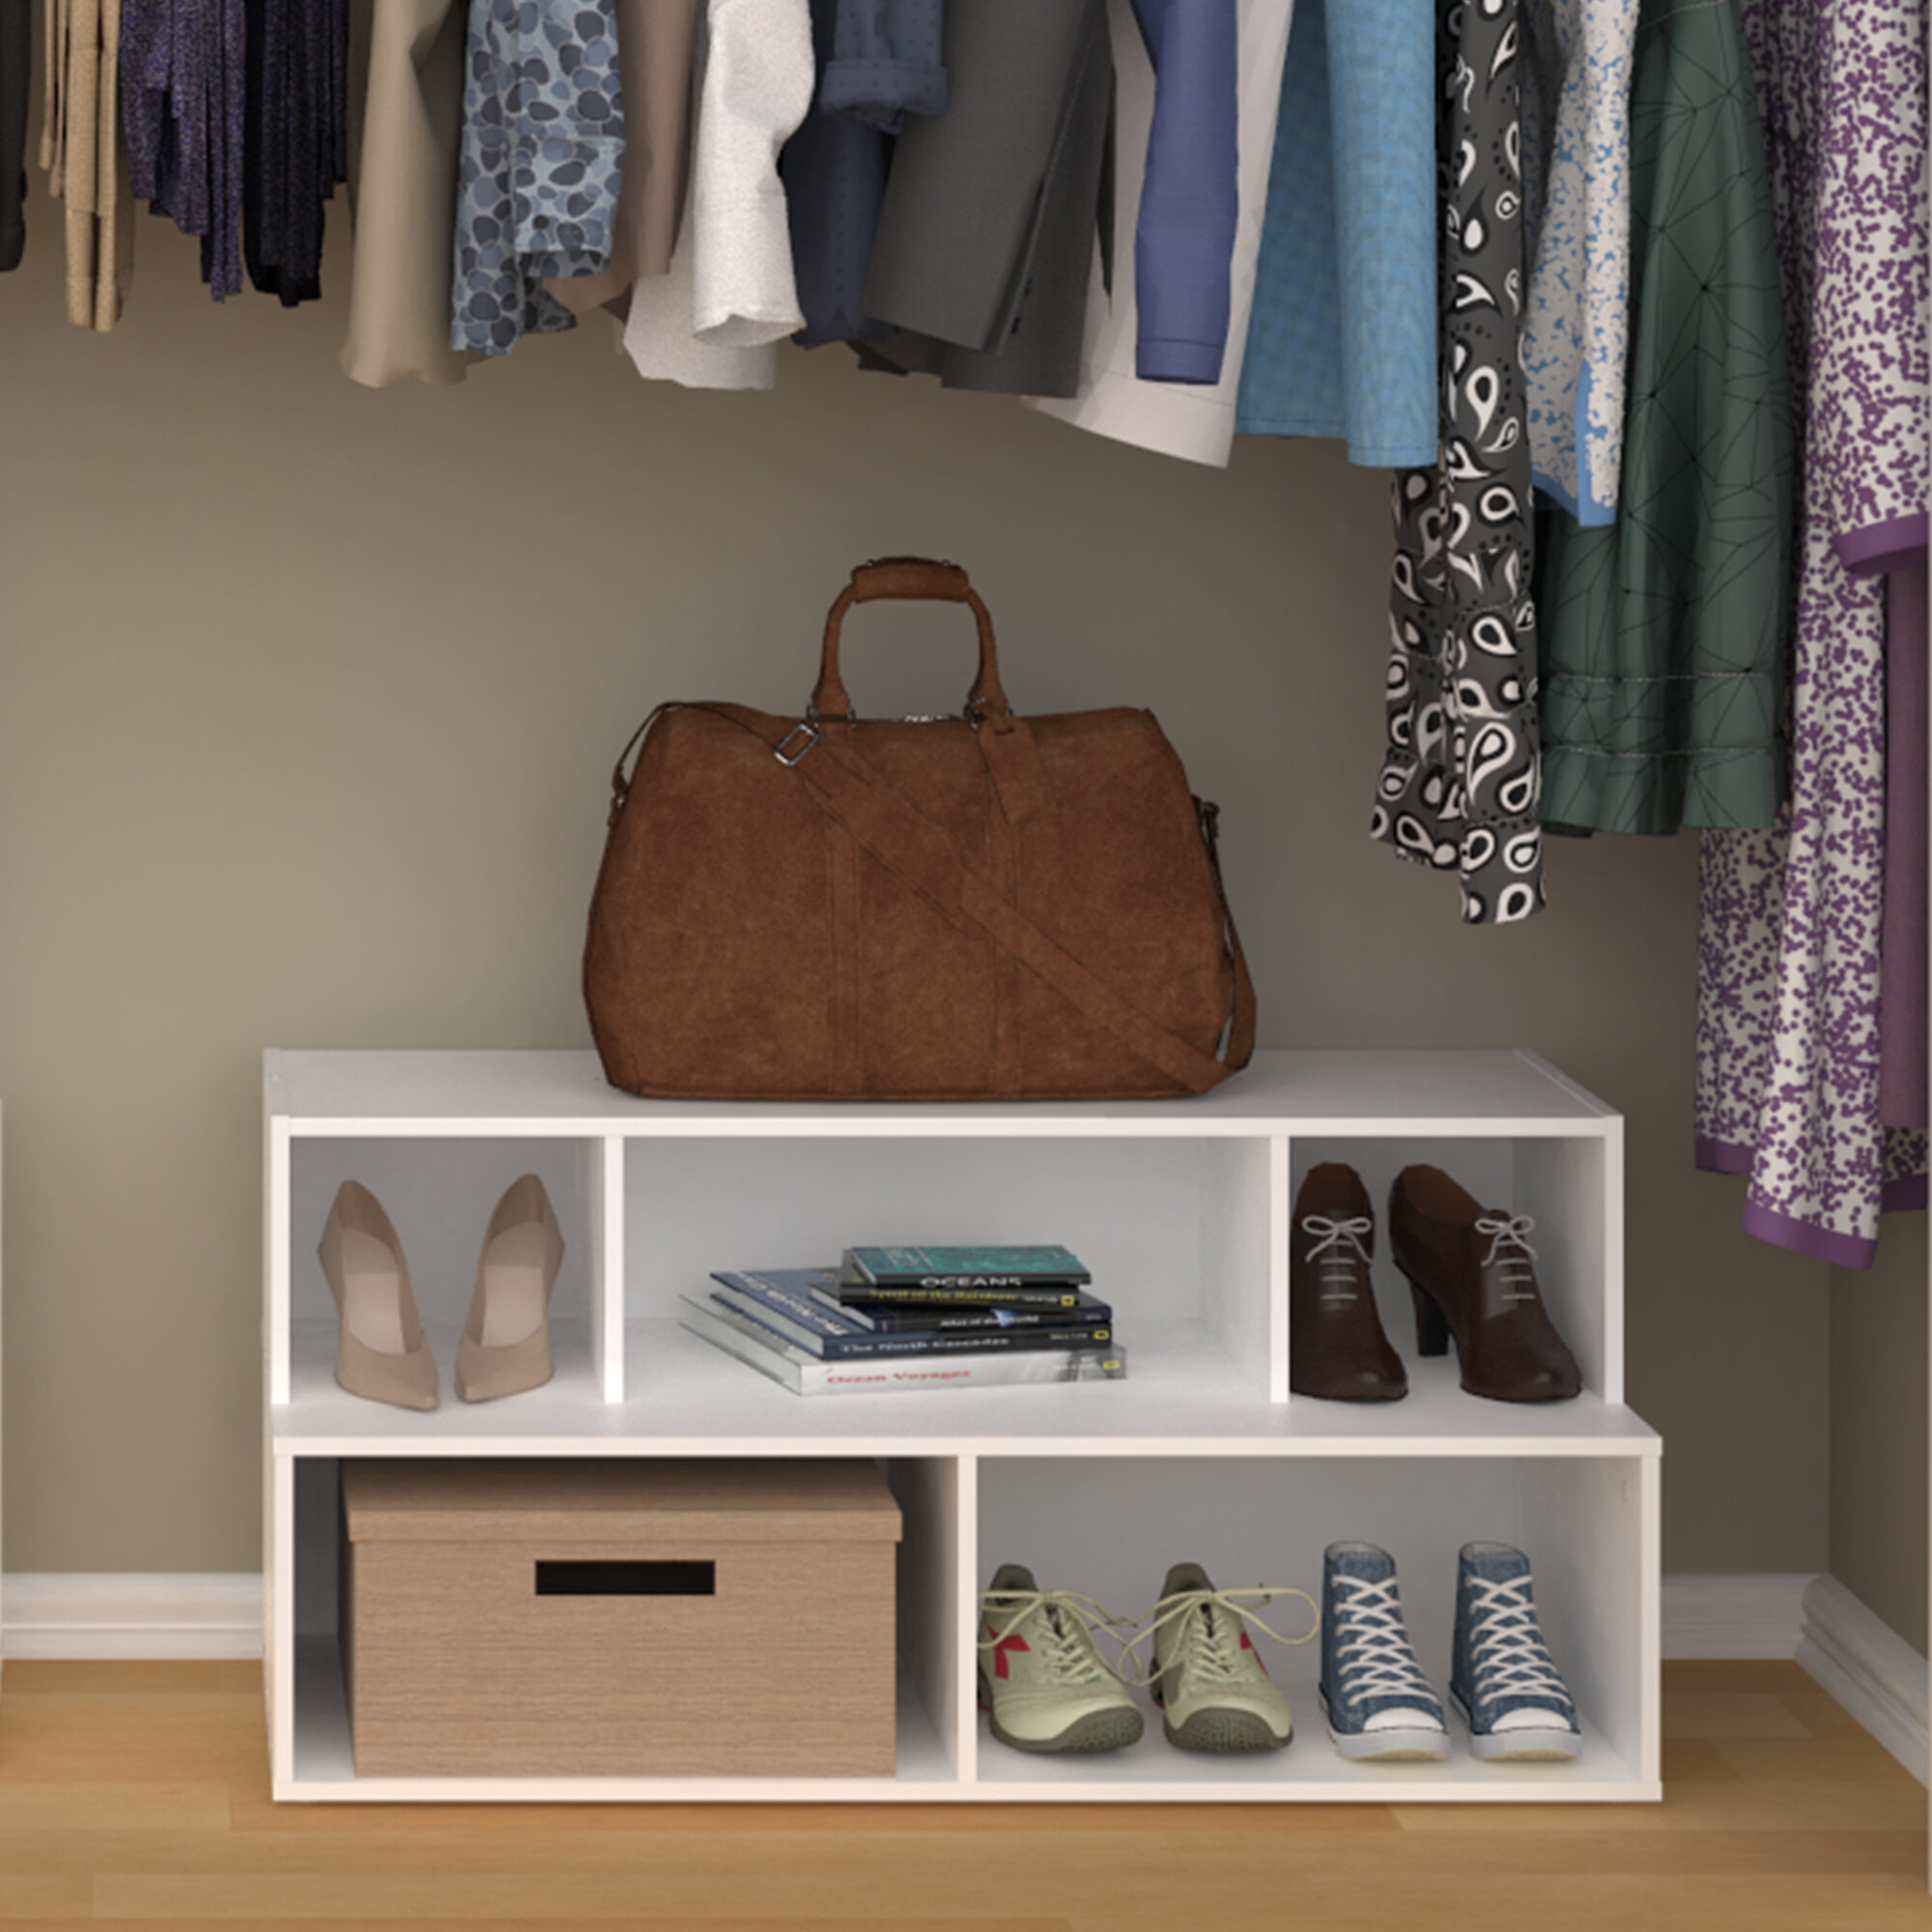 Purse closet  Shoe organization closet, Organizing purses in closet, Purse  storage